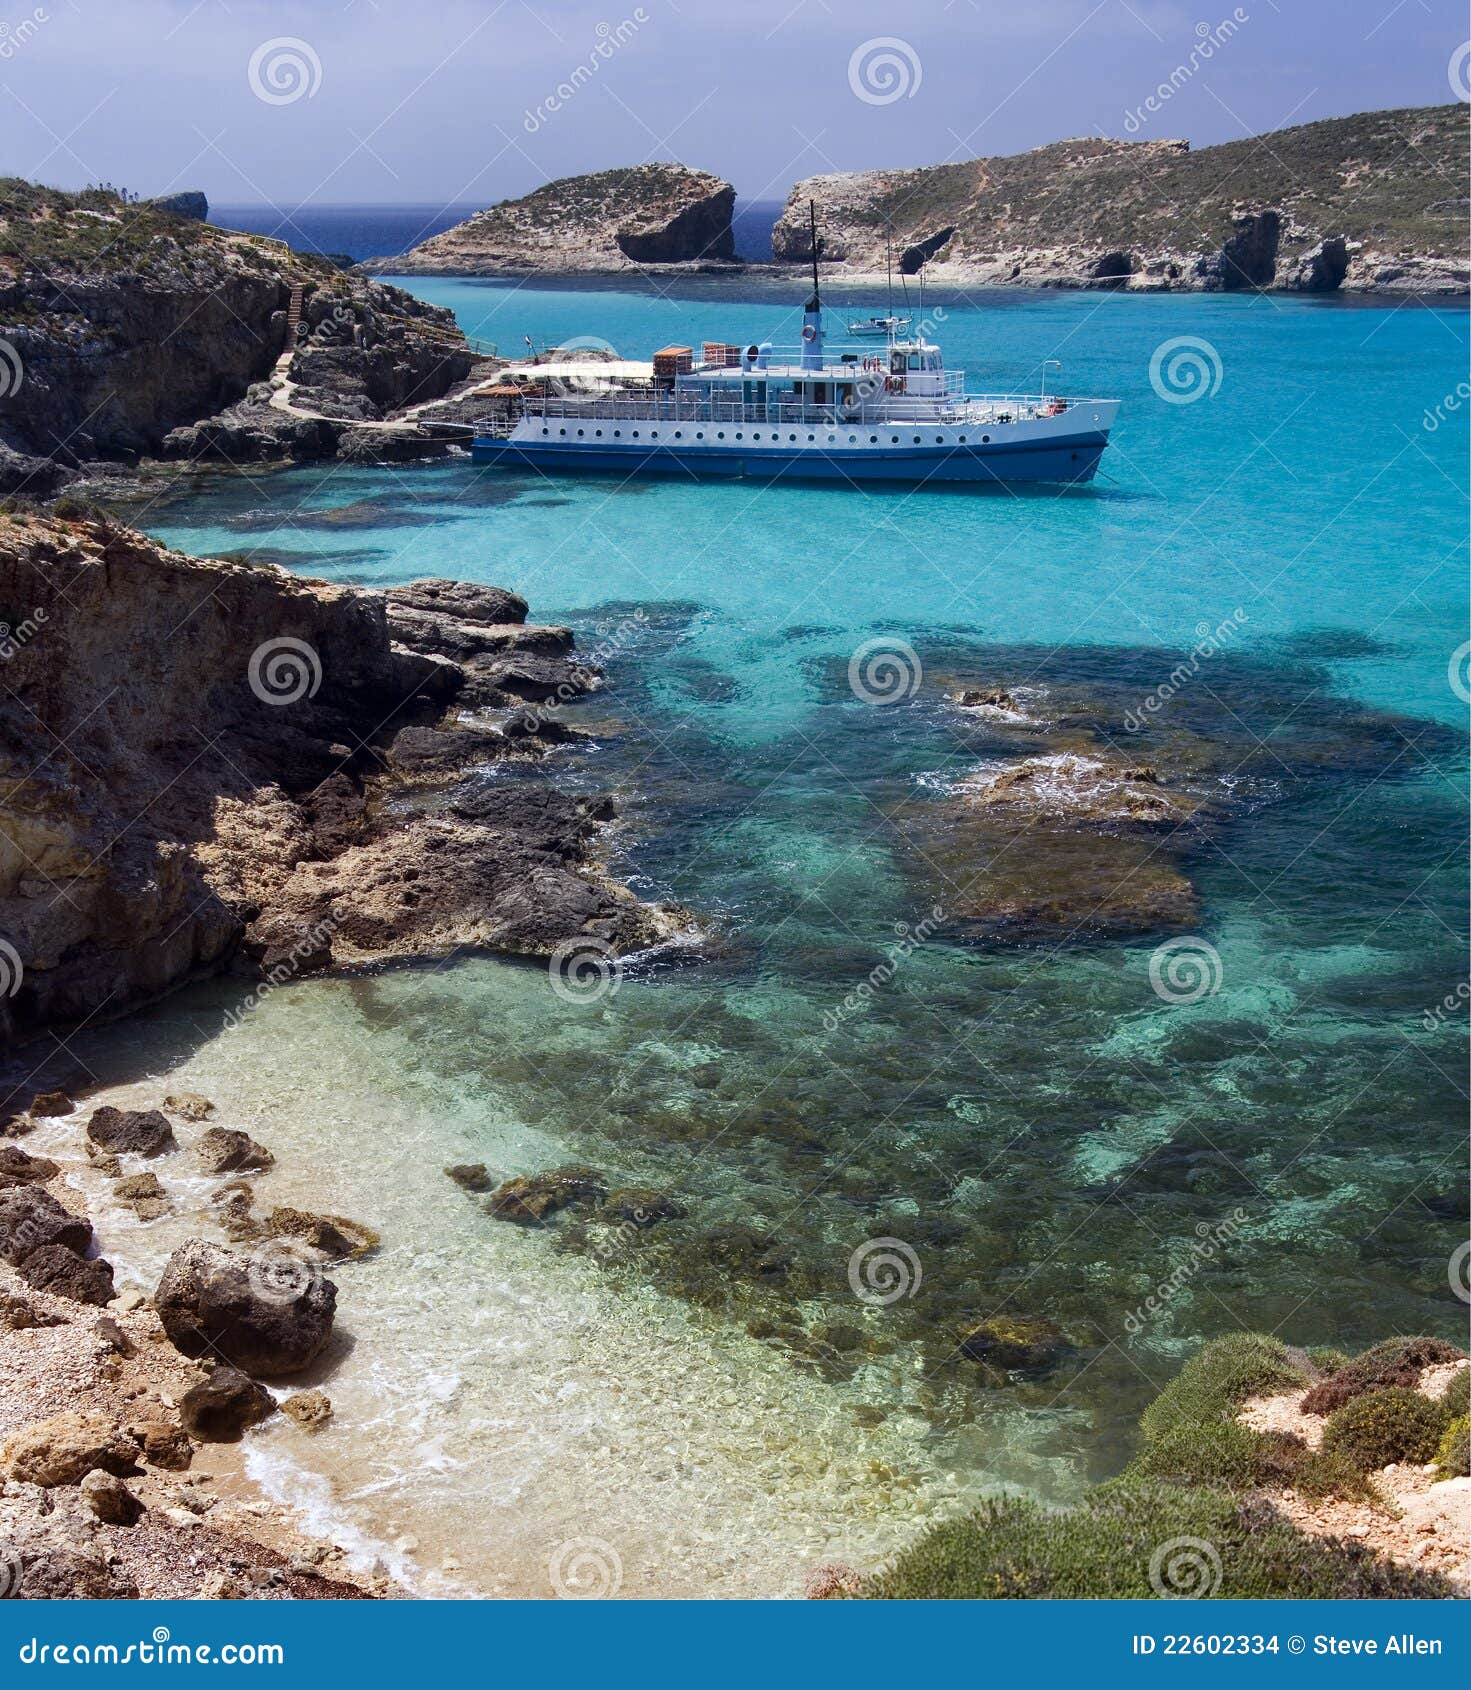 blue lagoon - island of comino - malta